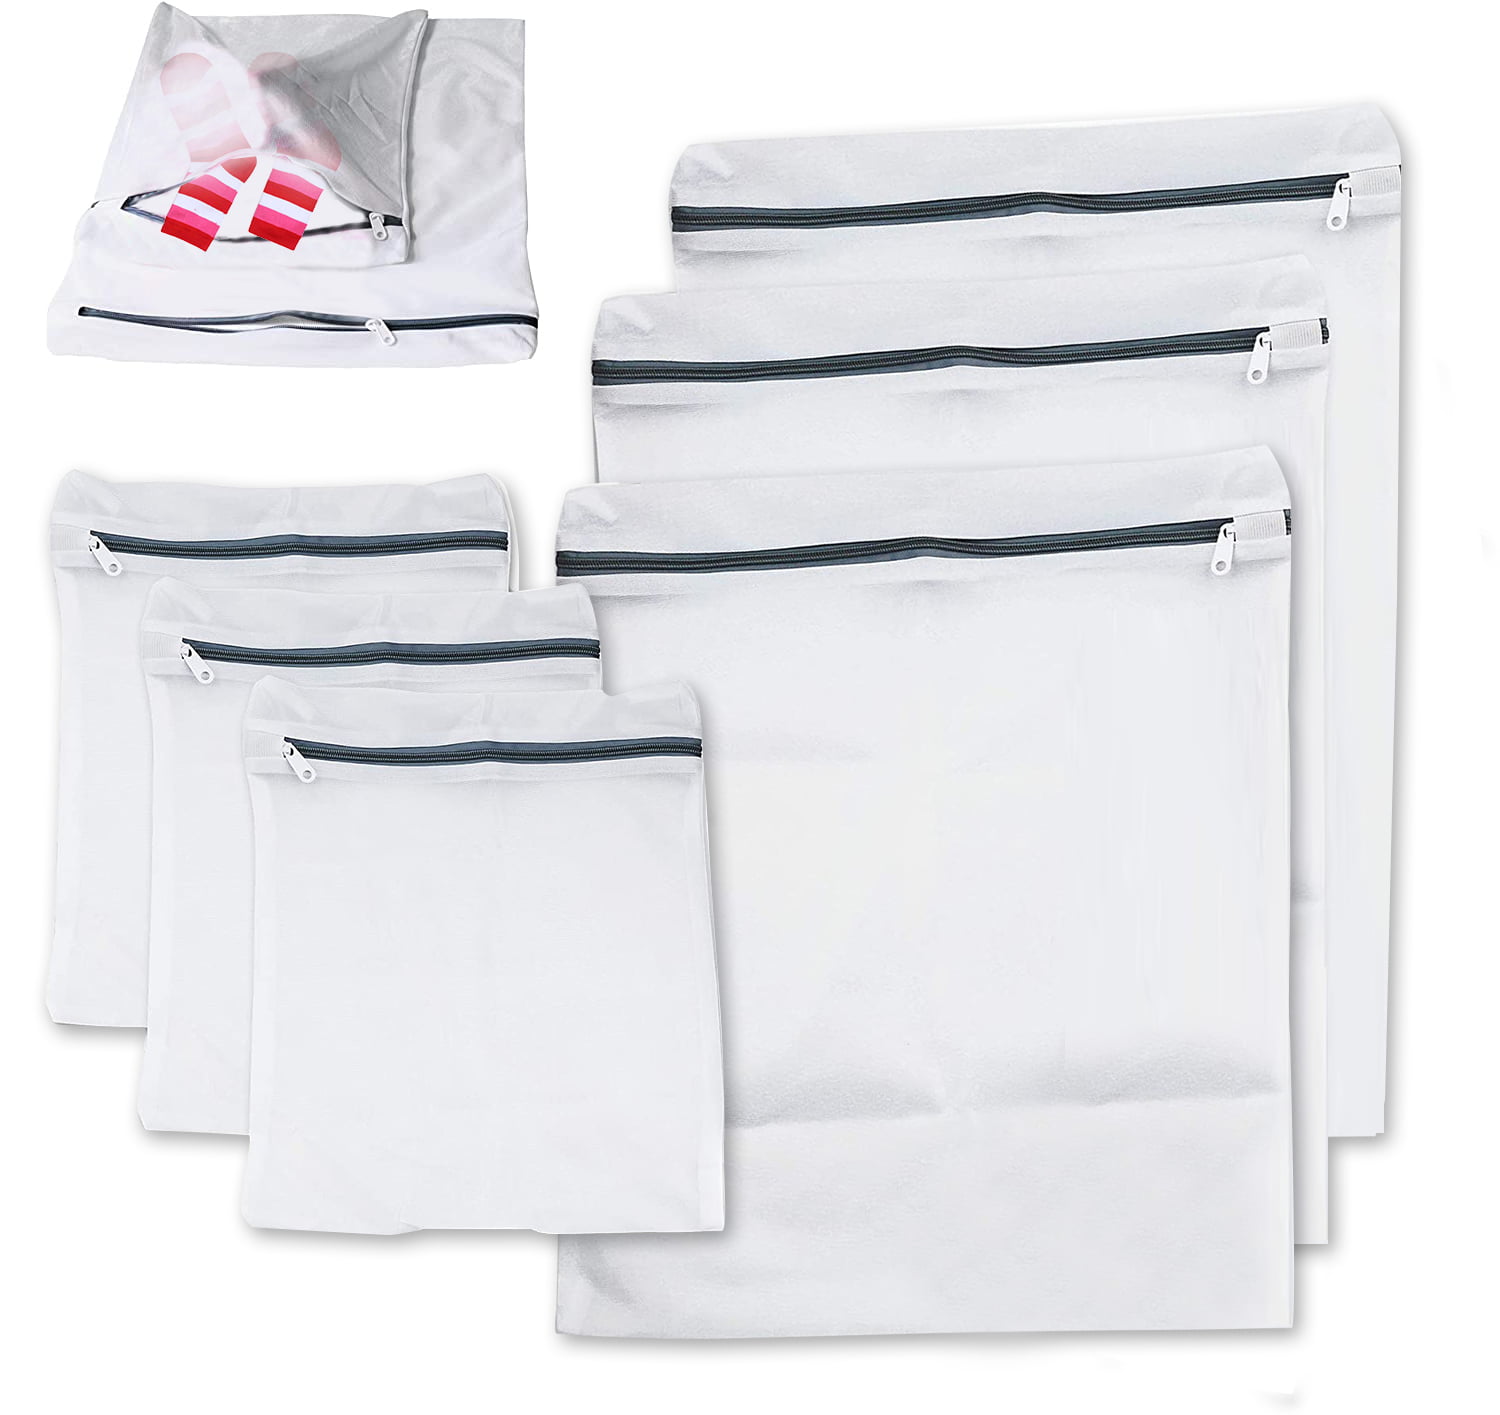 BOBOZHONG 6 Pack Large Laundry Washing Bag,Zippered Mesh Washing bag Reusable Durable Mesh Laundry Bag with Zipper Closure for Bed sheet,Clothes 60cm*60cm,50cm*40cm,40cm*30cm 